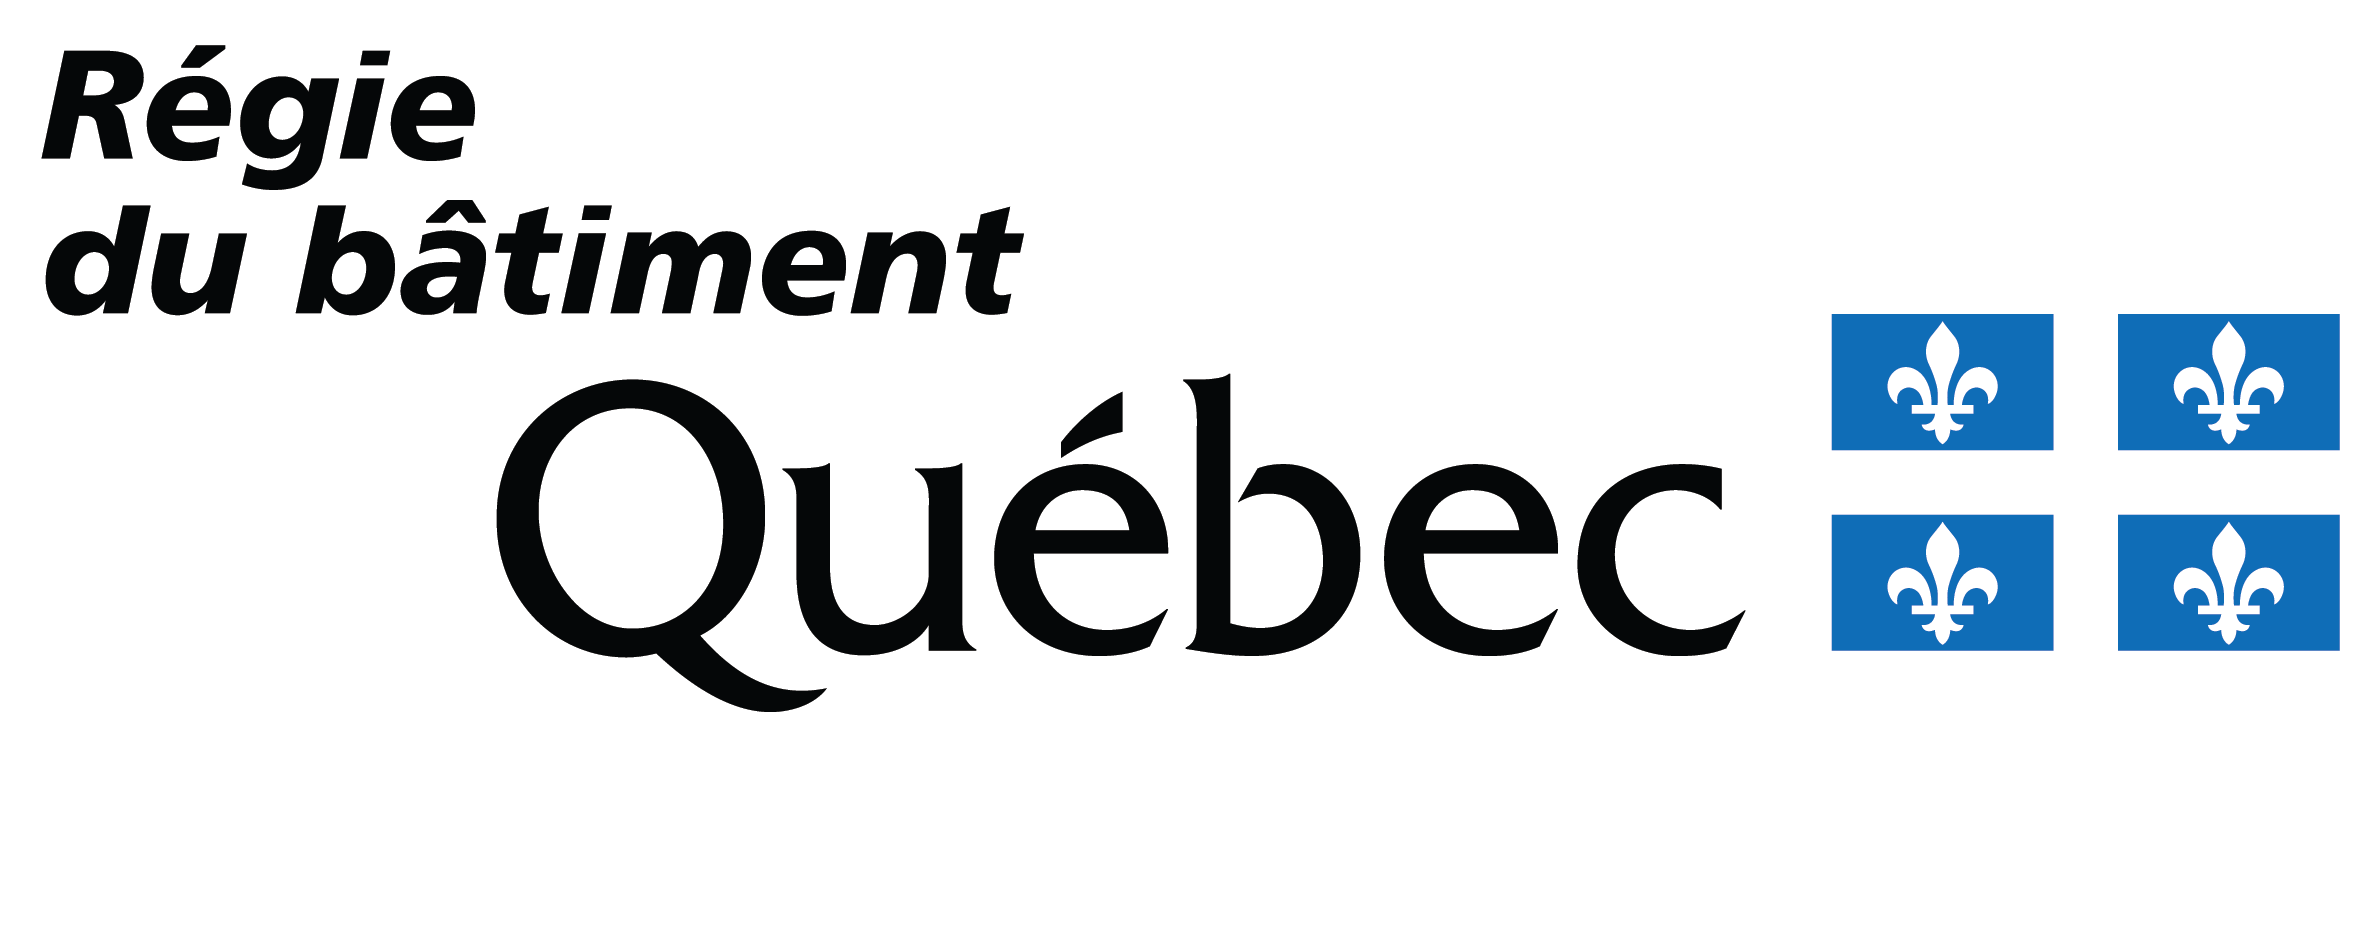 Regie-du-batiment-logo